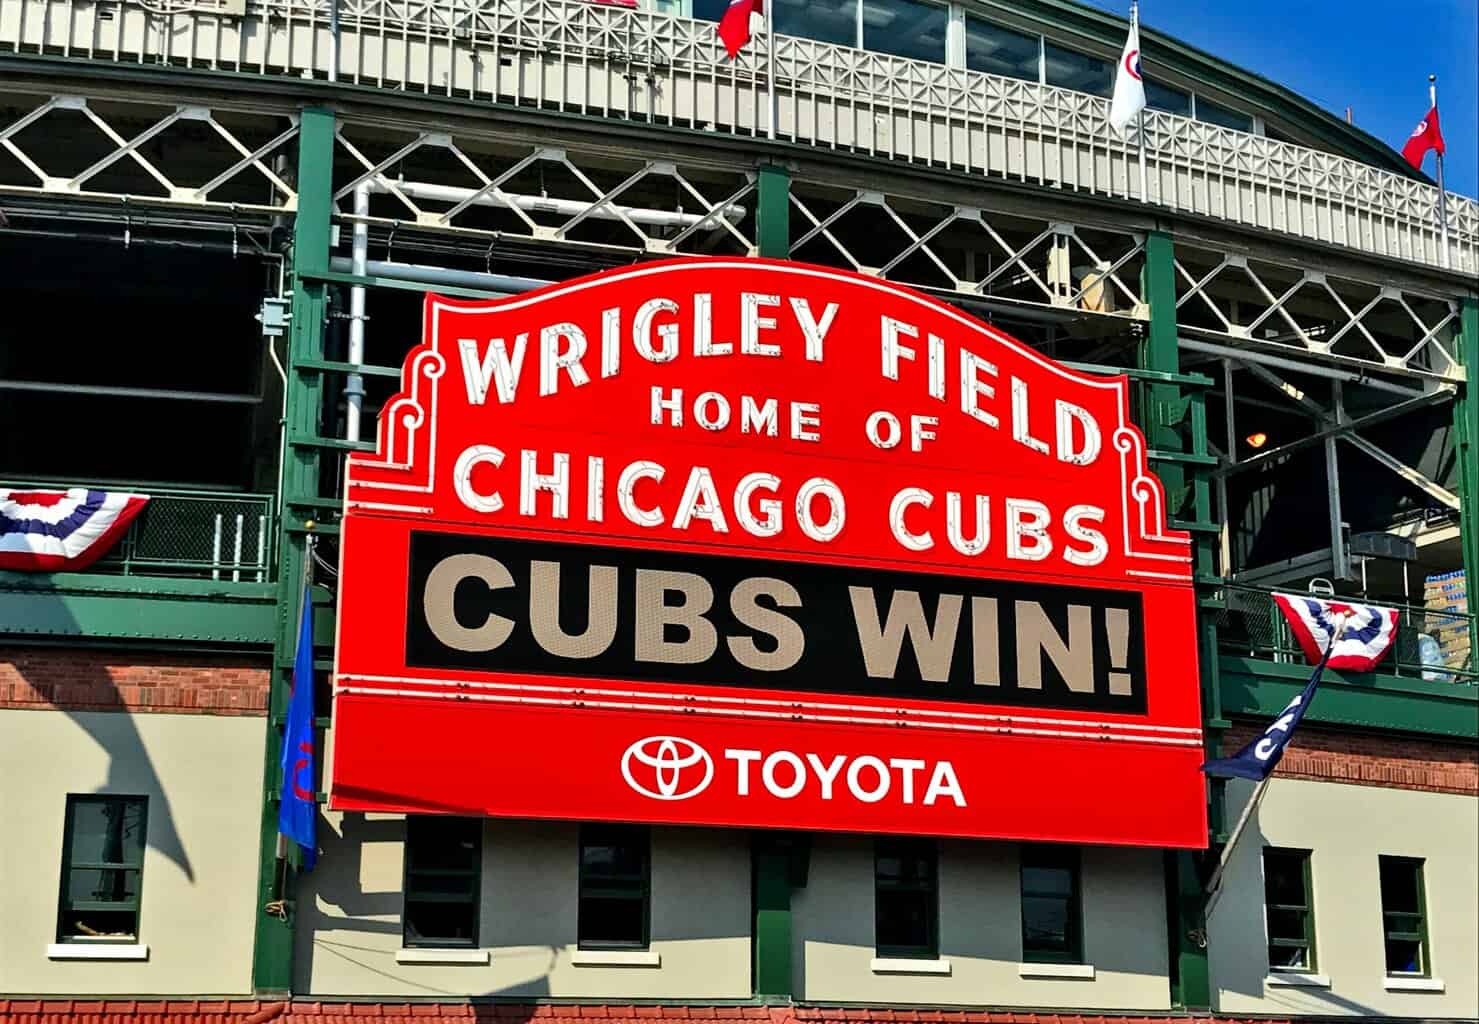 Chicago Cubs baseball - Cubs Win